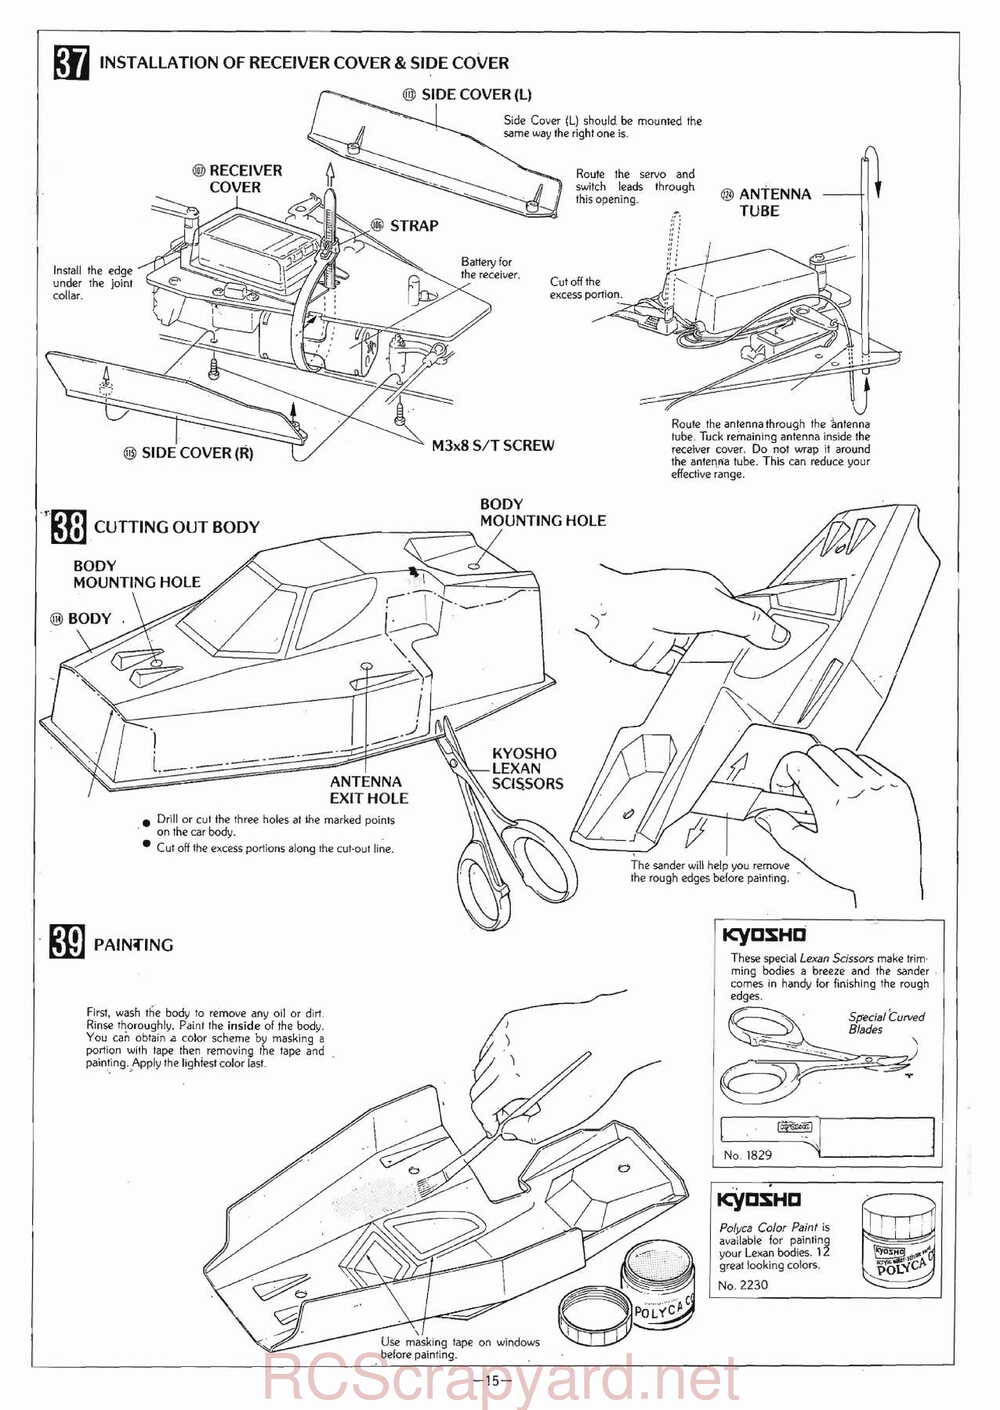 Kyosho - 3041 - Circuit-1000 - Stinger-4wd - Manual - Page 15